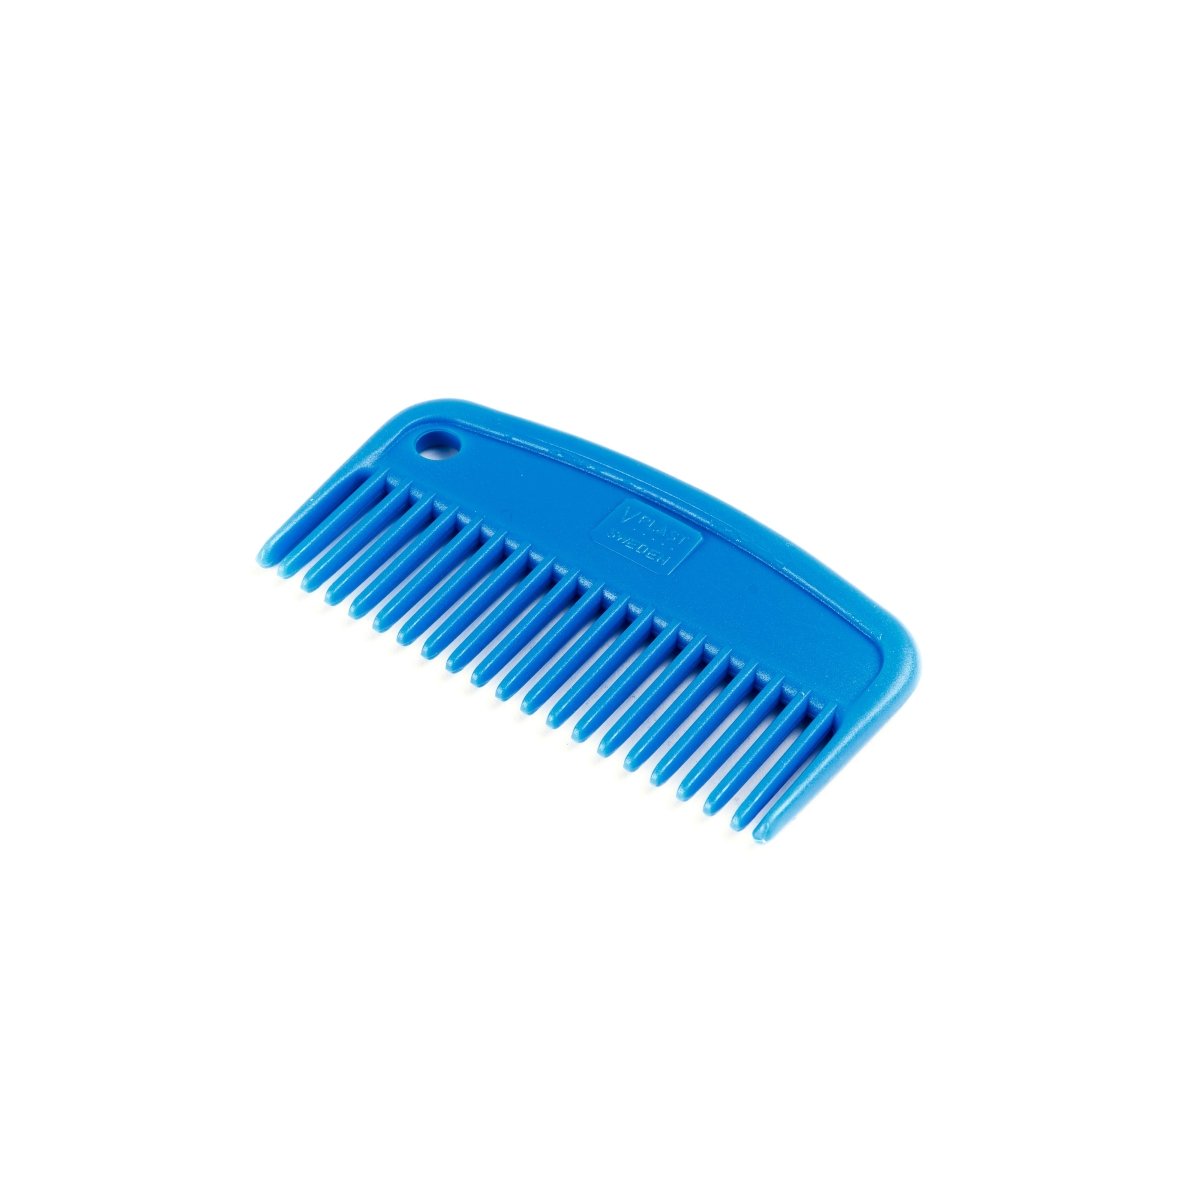 EZI-GROOM Plastic Mane Comb - Small - Blue -